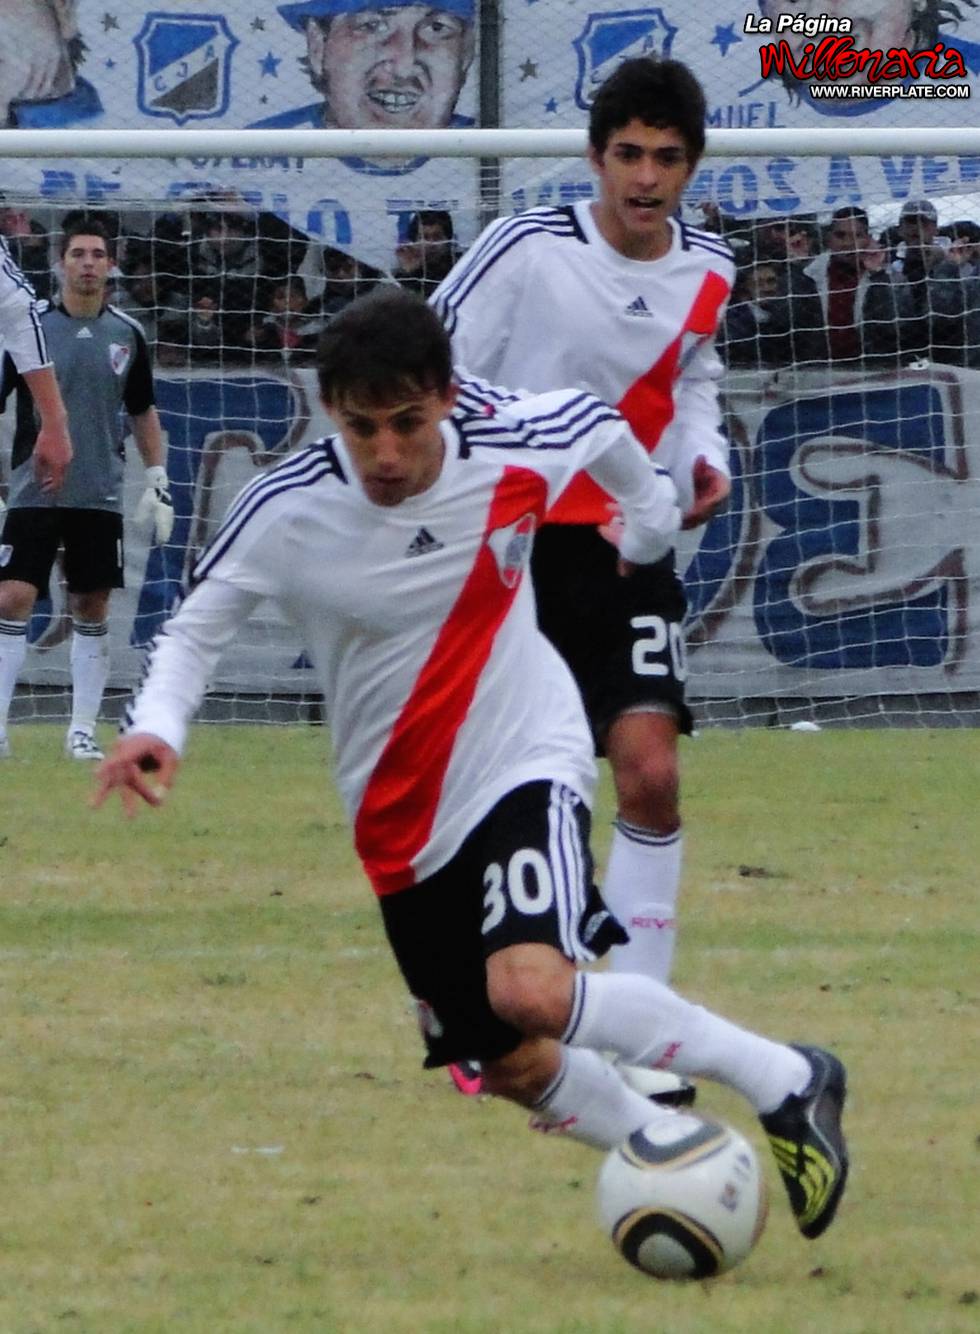 River Plate vs Juventud Antoniana (Salta 2010) 30